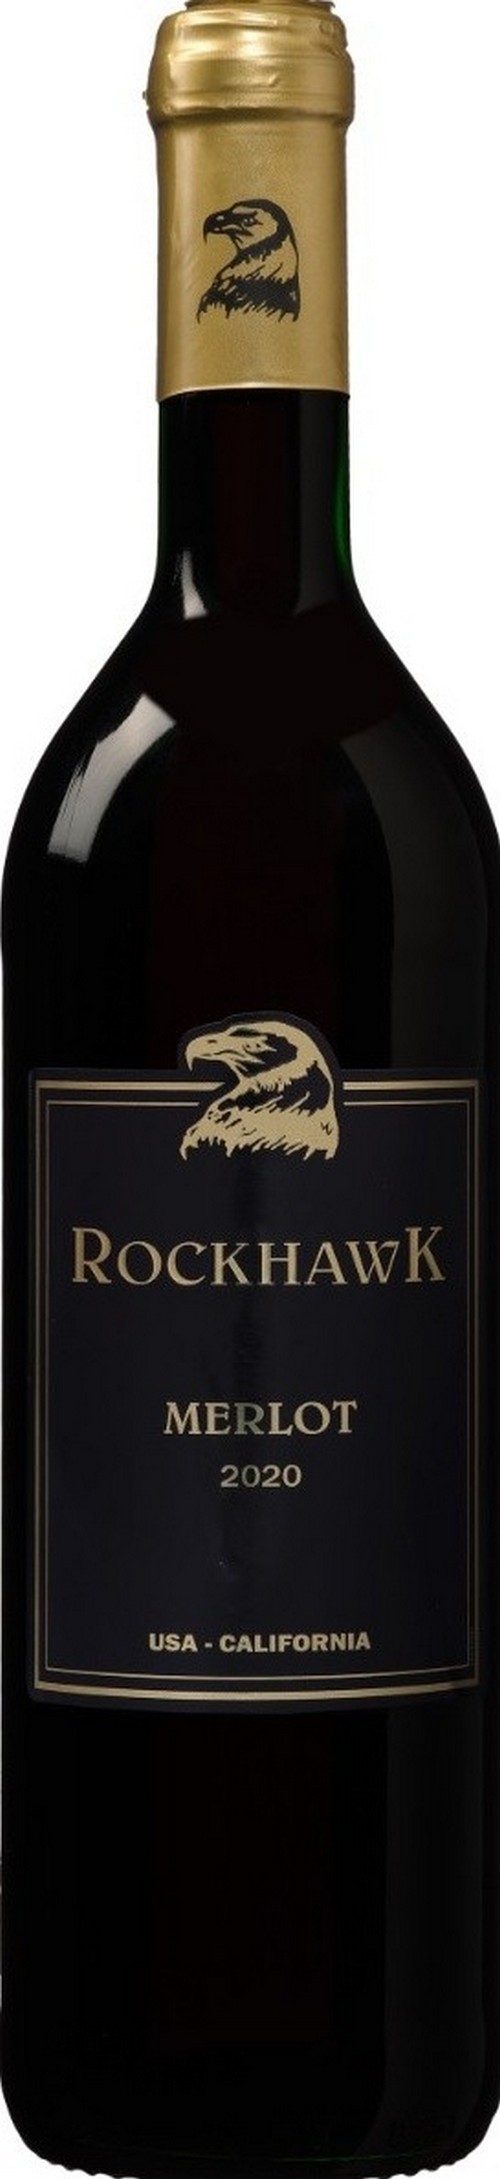 rockhawk-merlot-2020